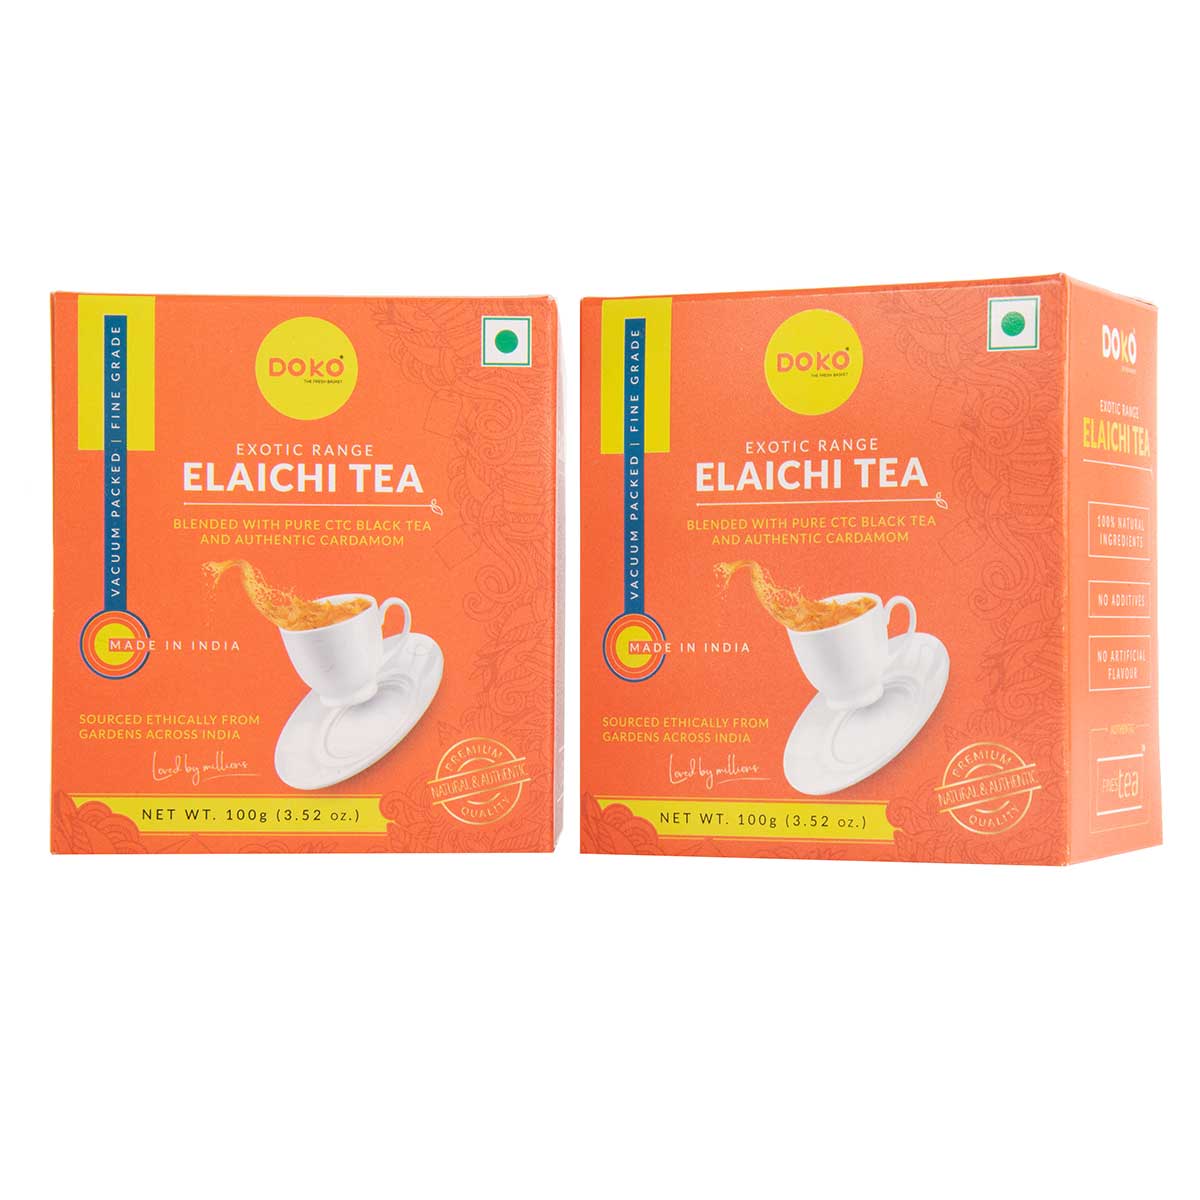 Exotic Elaichi Tea